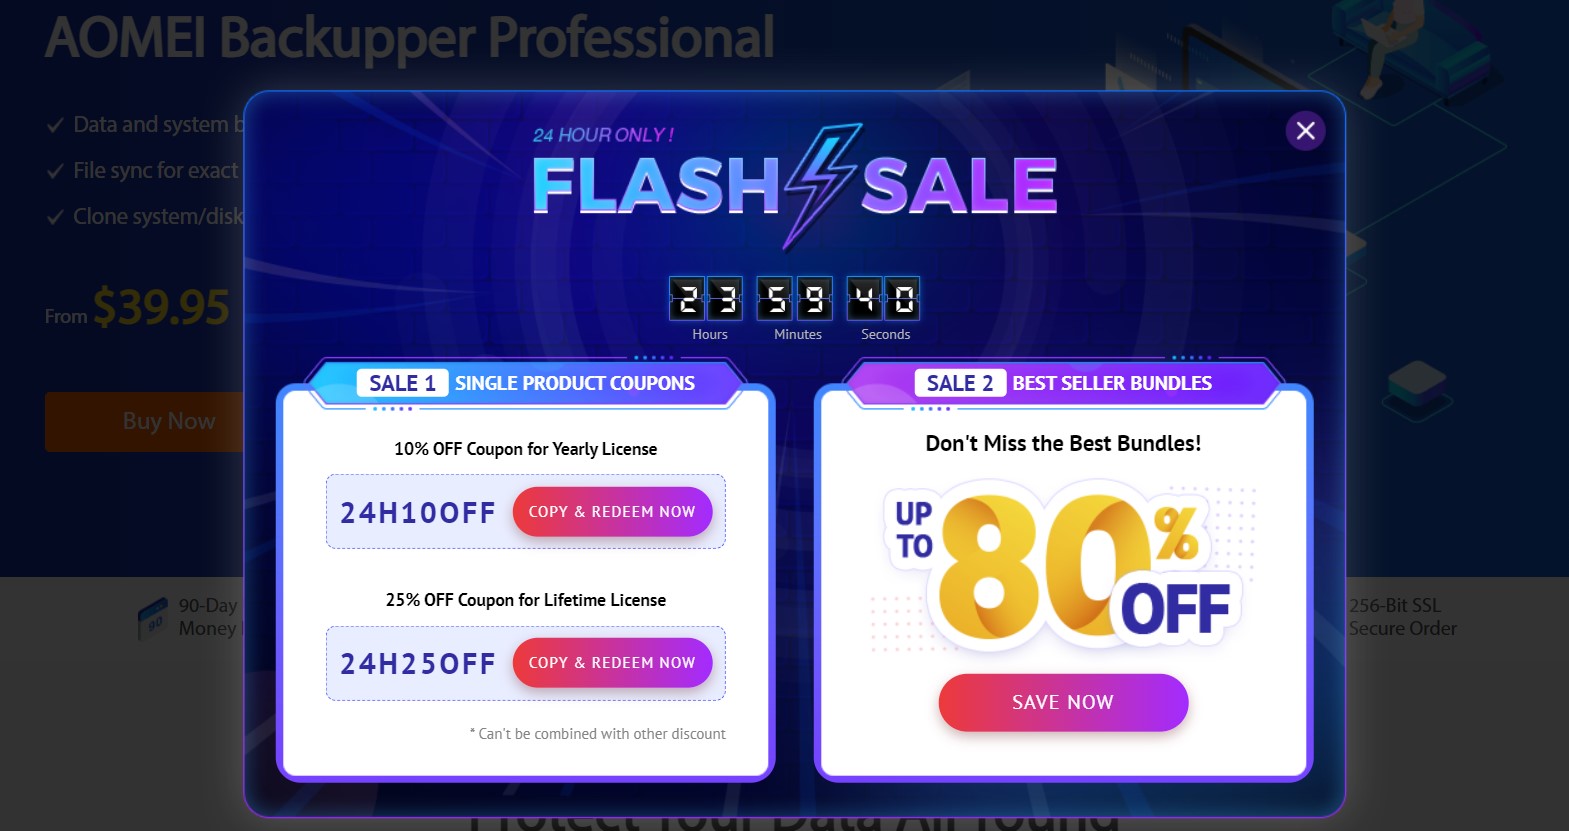 flash sale discount image